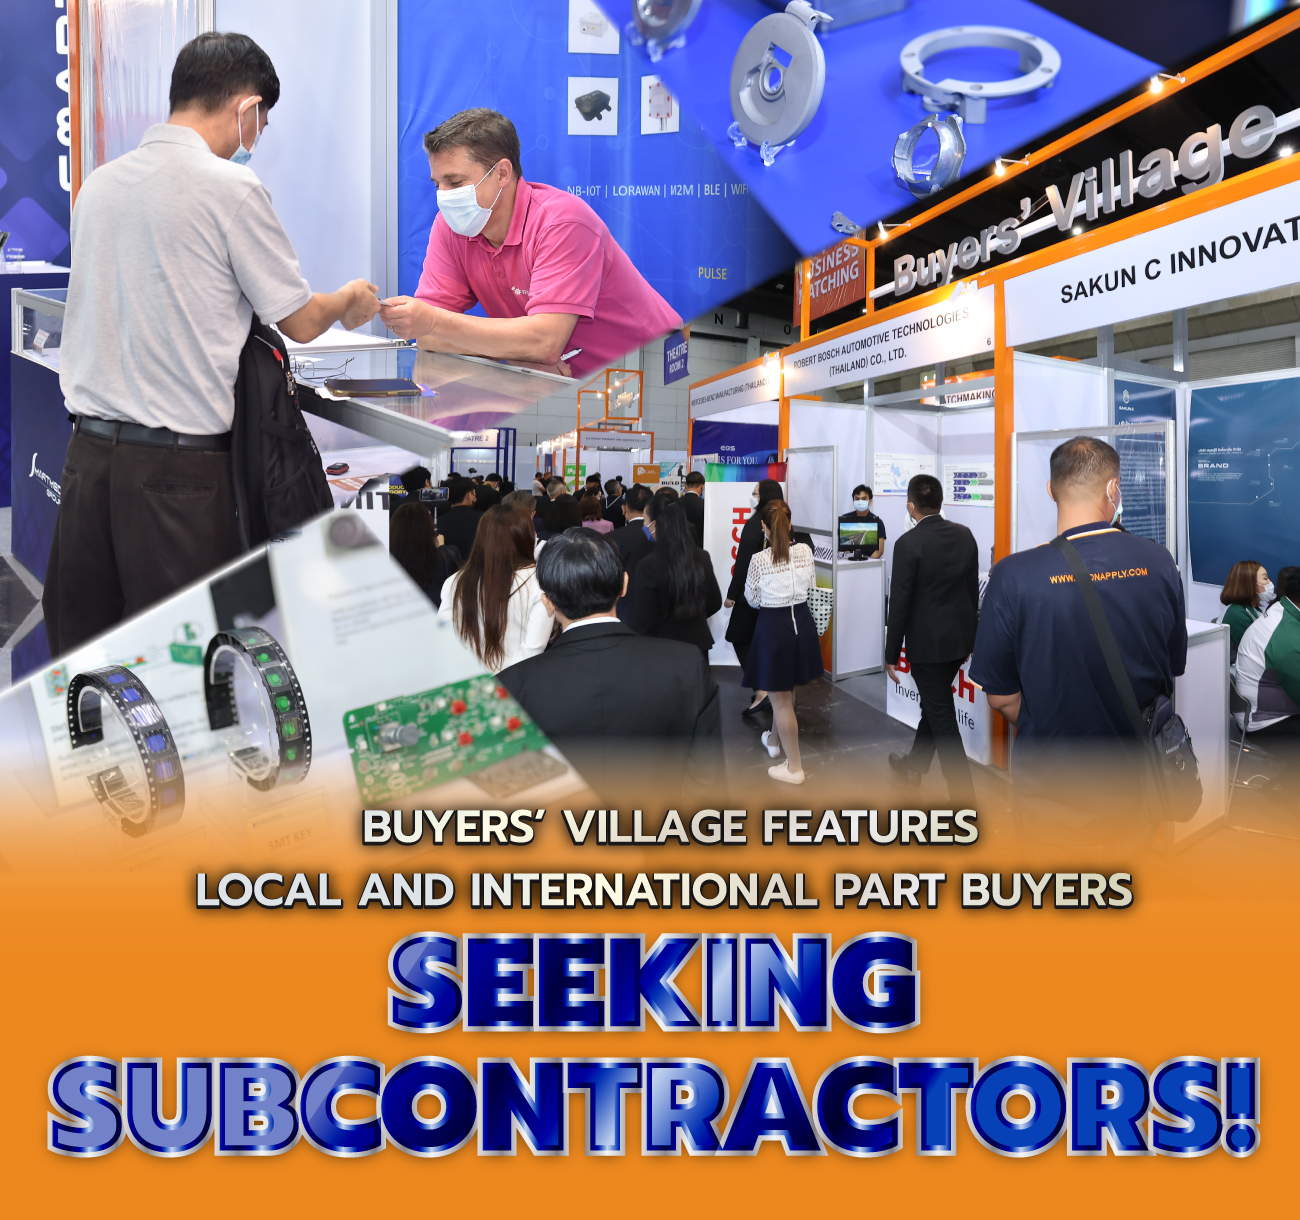 Buyers' Village features Local and International Part Buyers seeking Subcontractors!